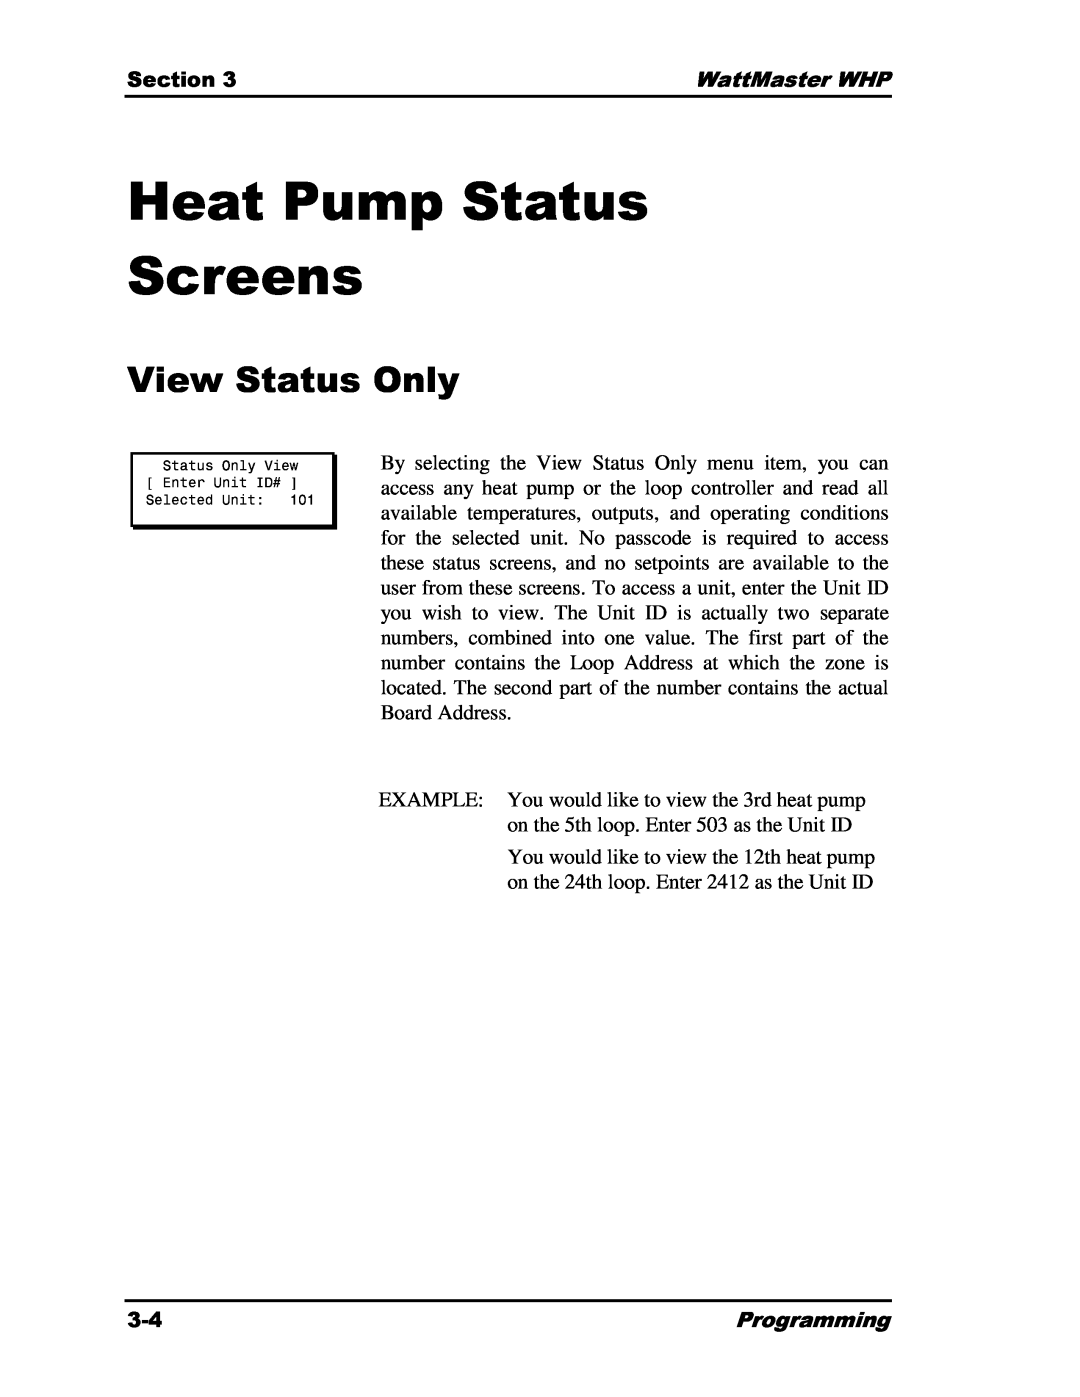 Heat Controller Water Source Heat Pump manual Heat Pump Status Screens, View Status Only, StausOlyView 